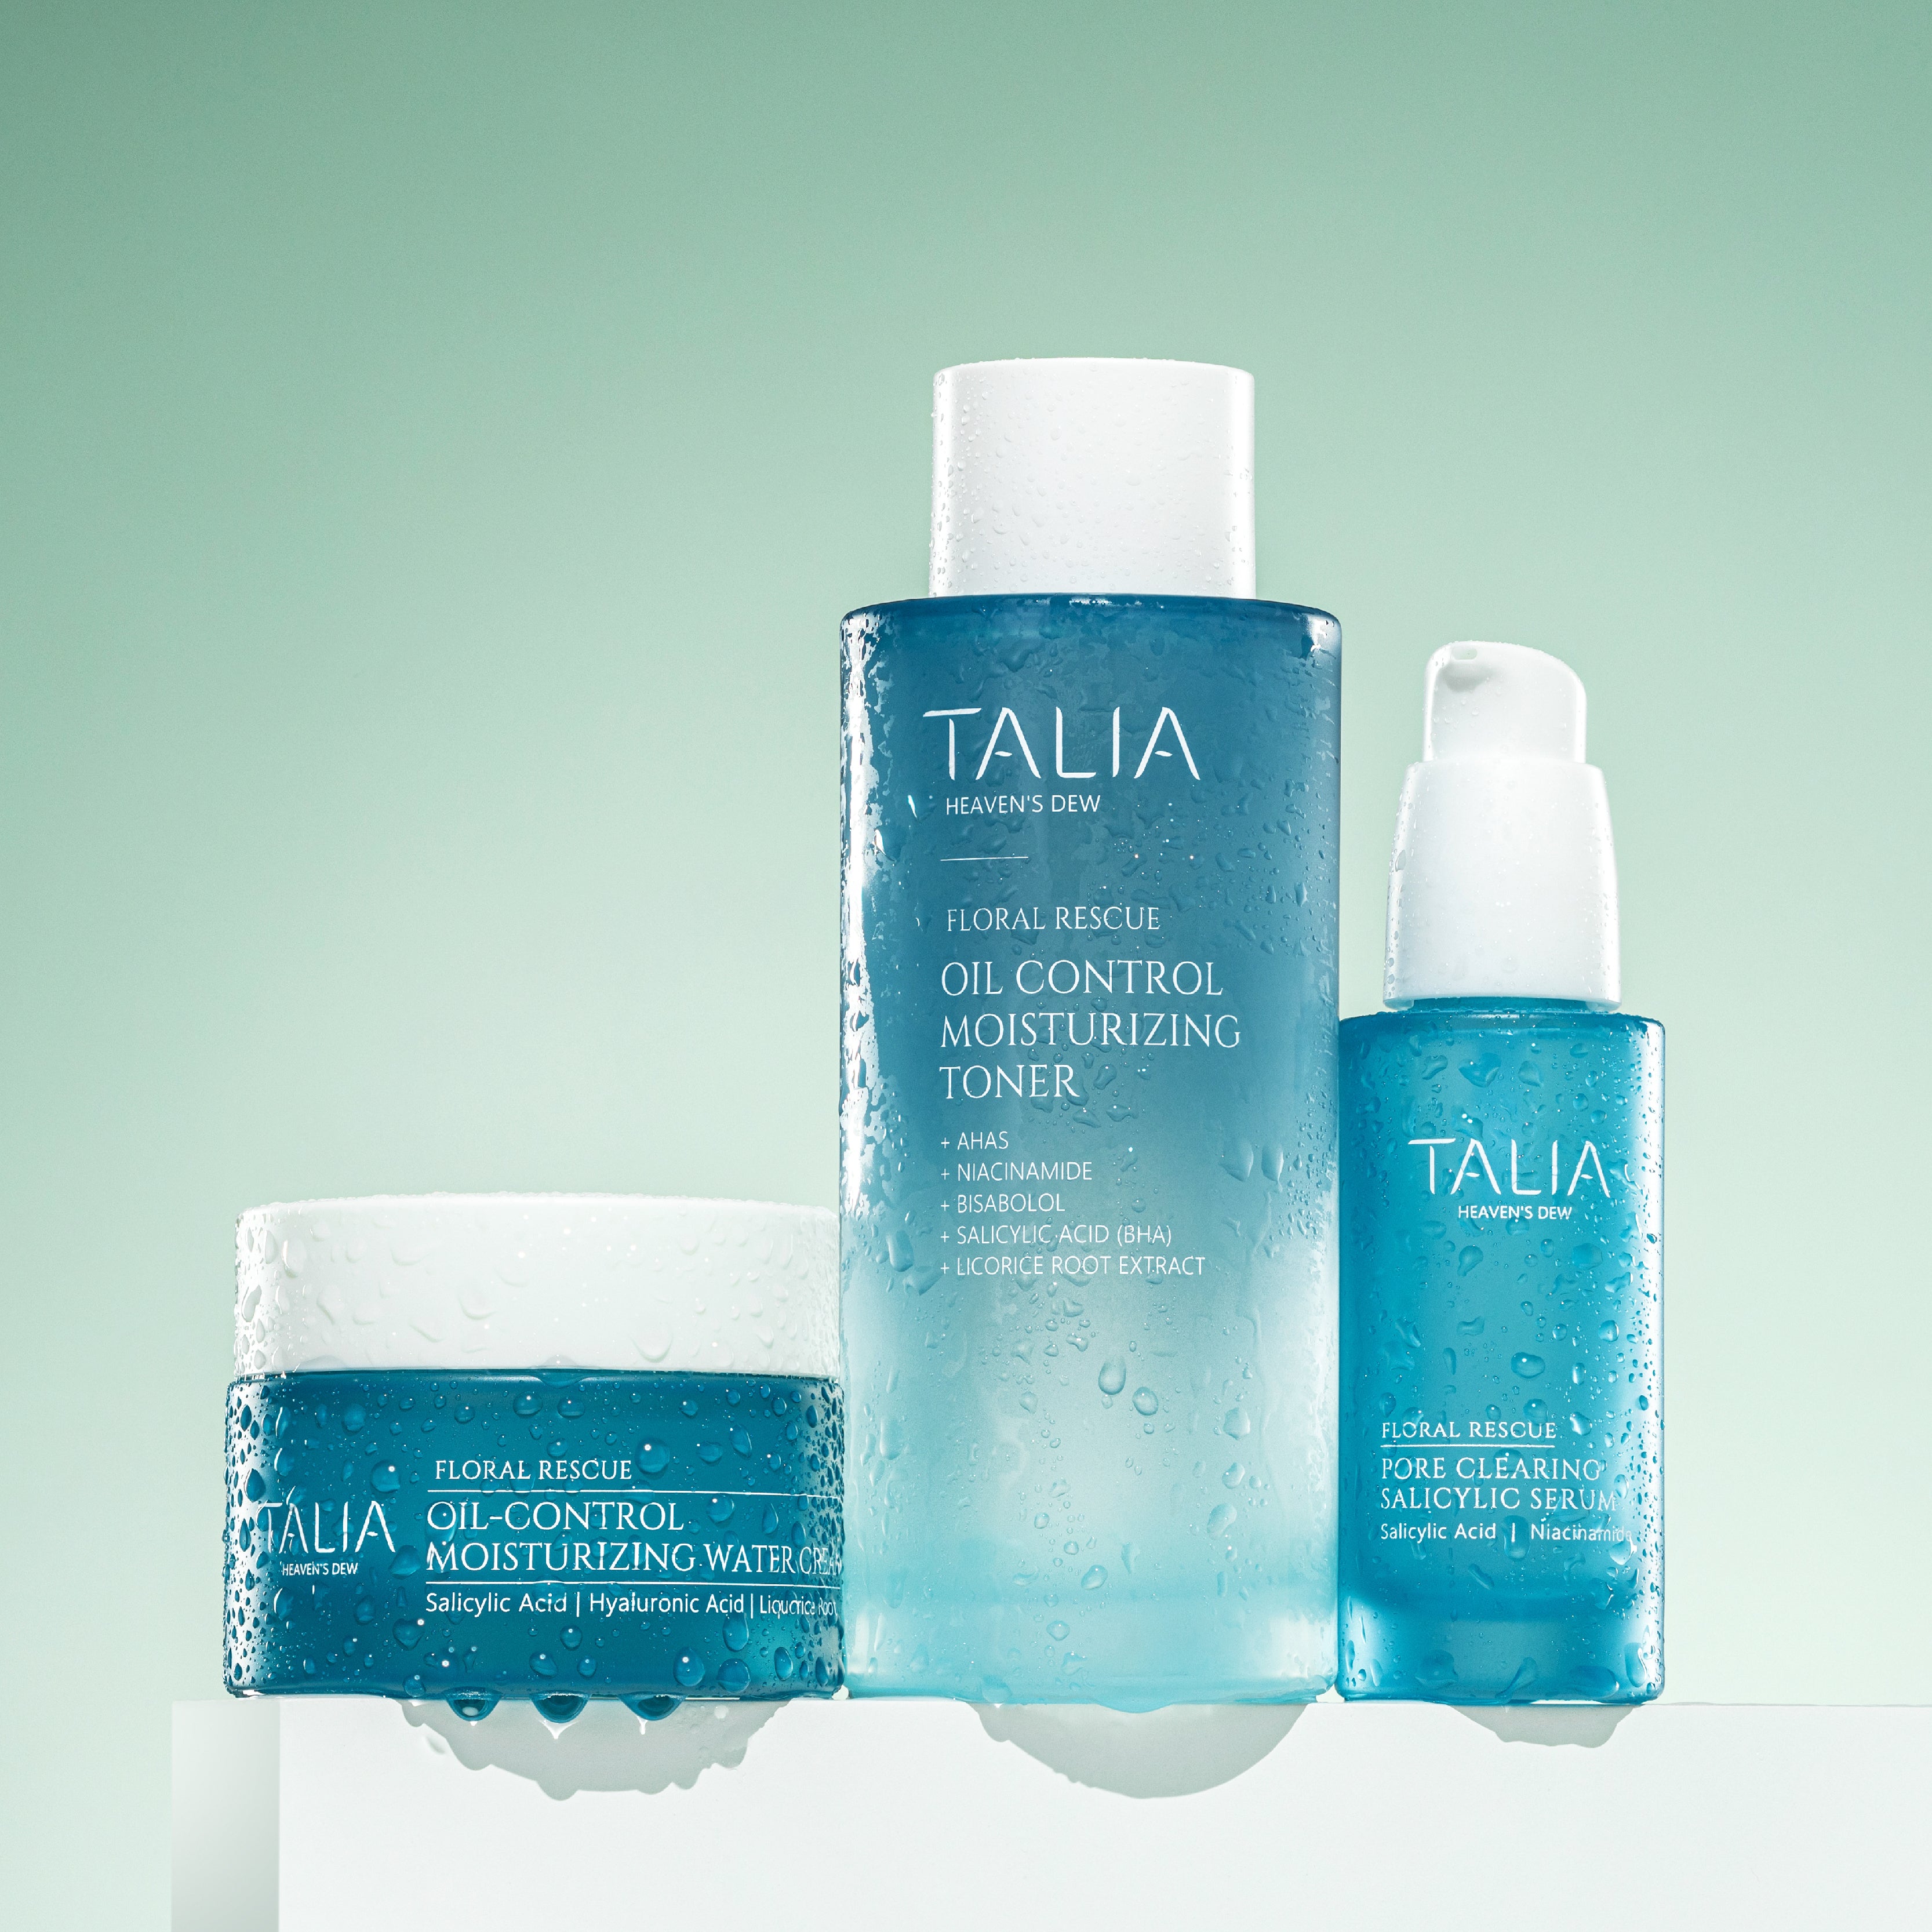 Oil-Control Moisturizing Water Cream – Talia Heaven's Dew